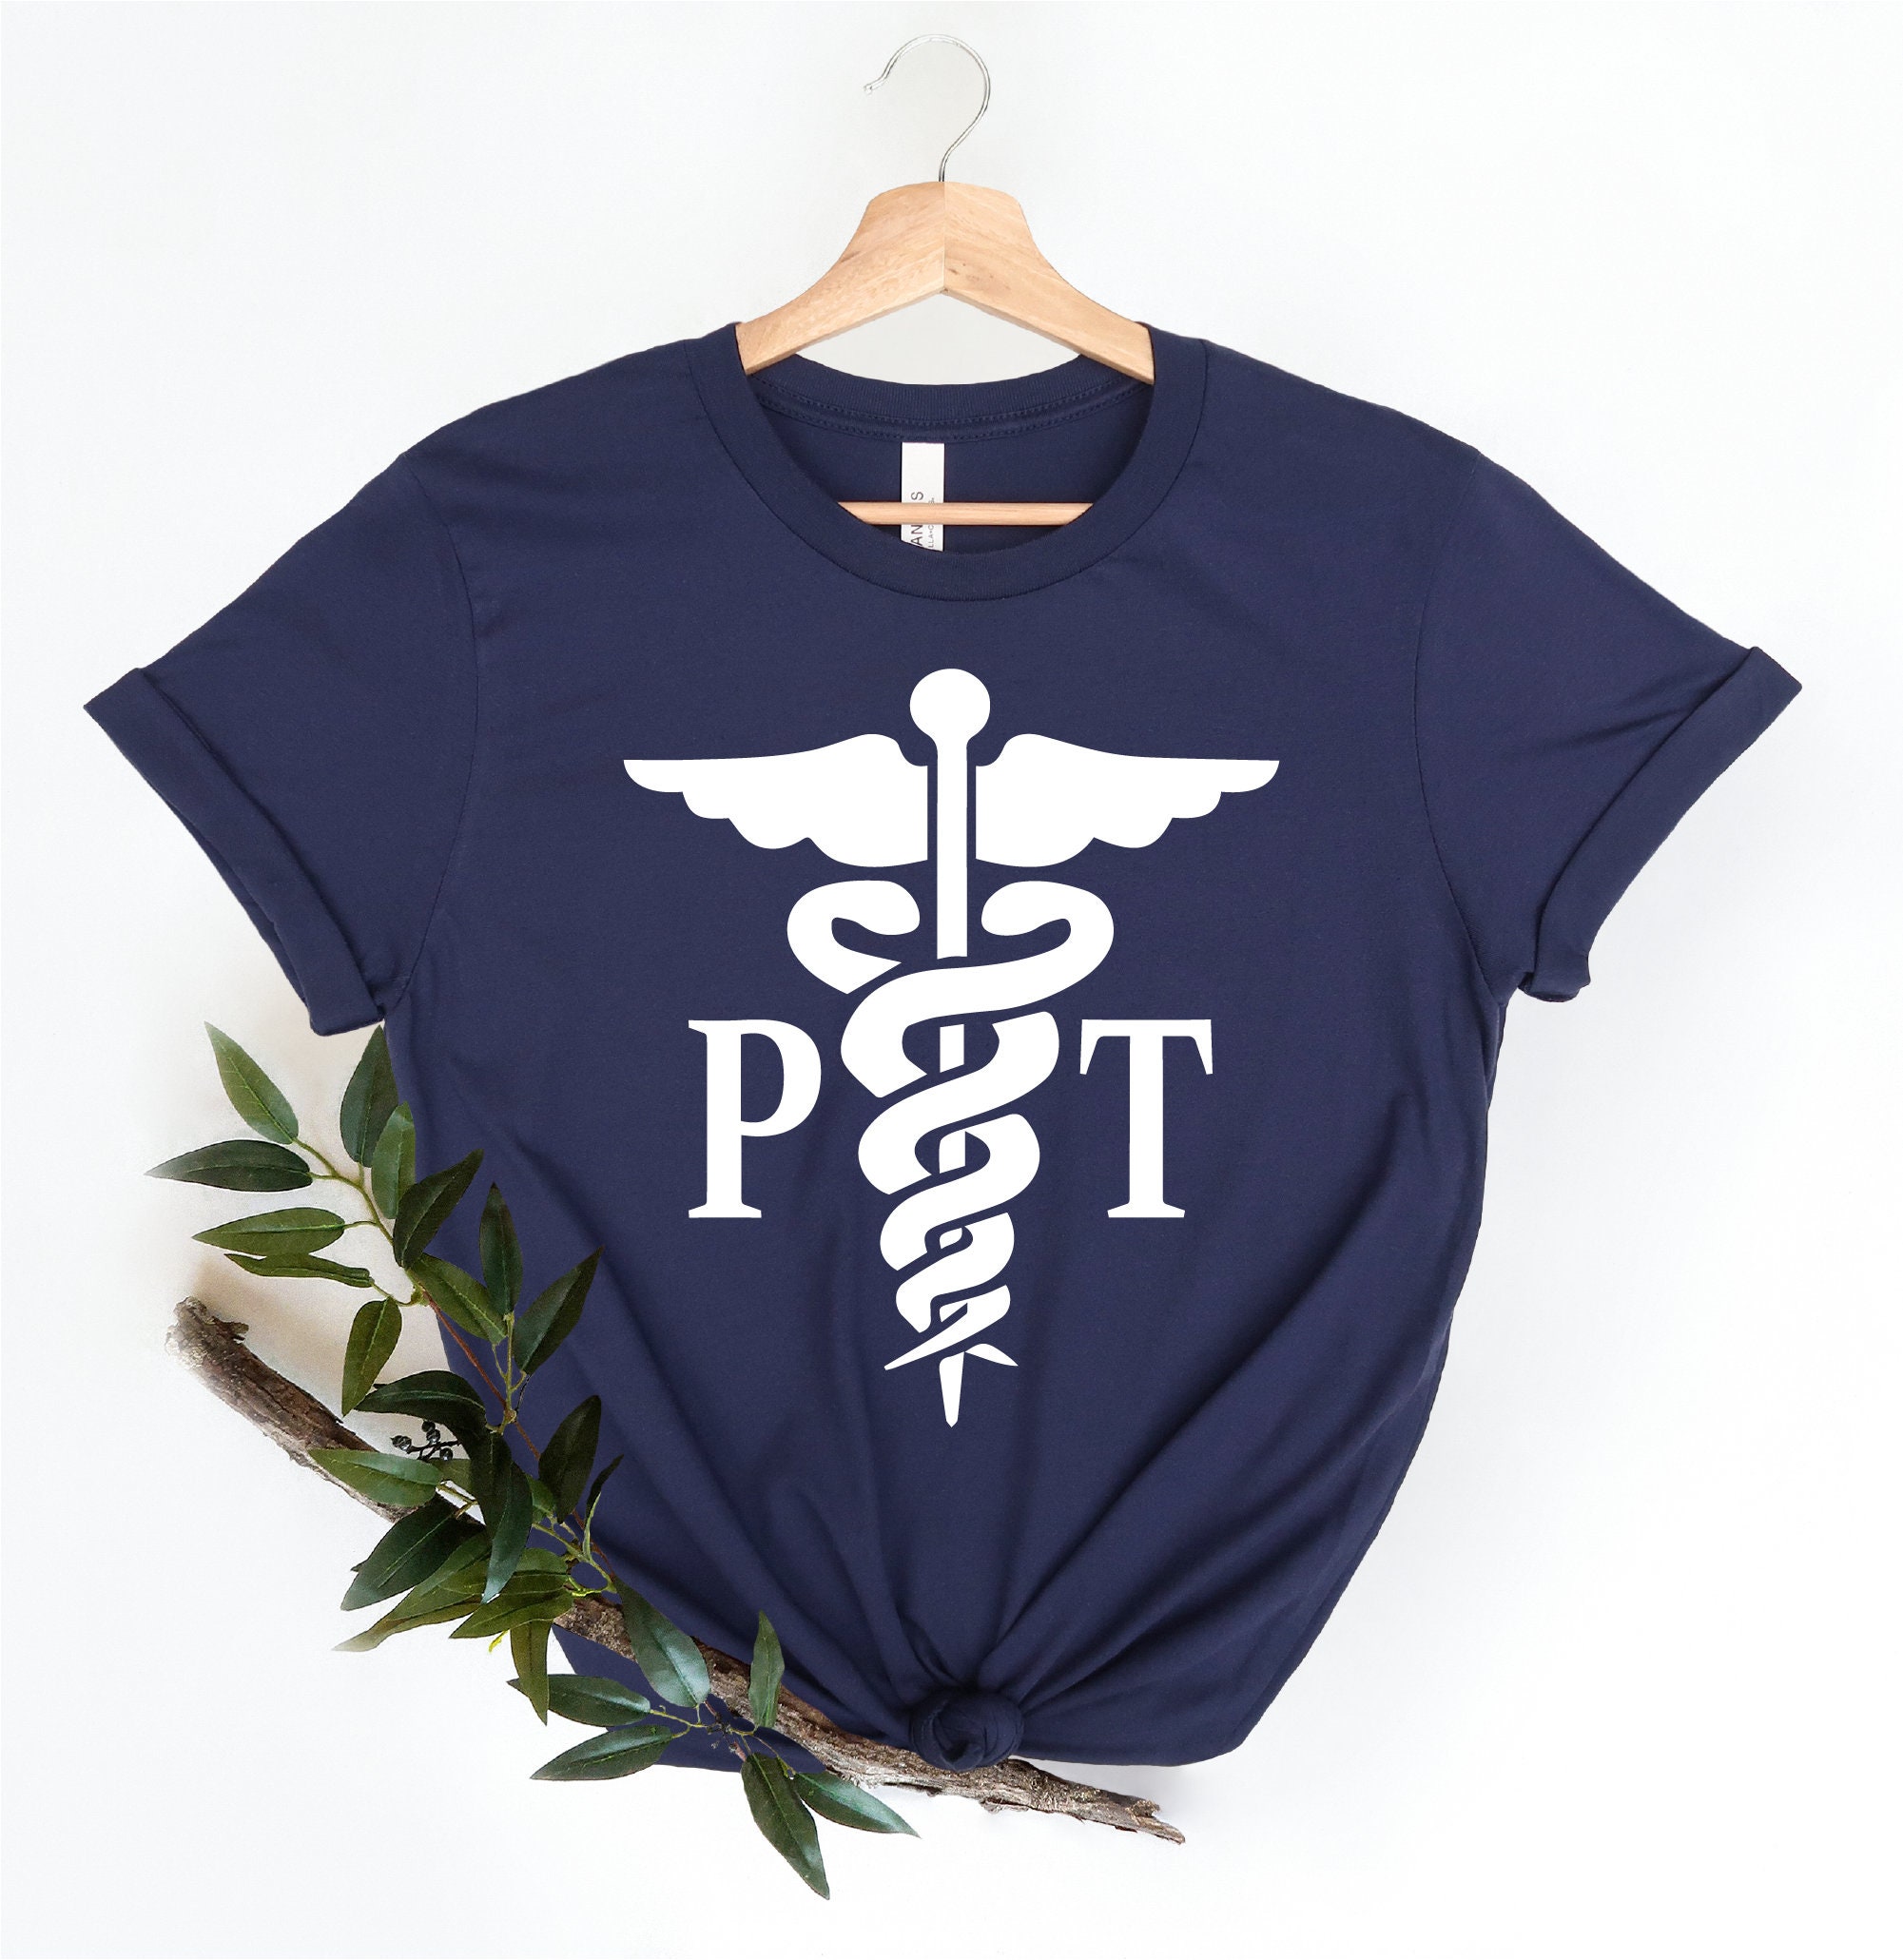 Discover Physical Therapist Shirt, Pt Shirt, Physical Therapy, Therapist Shirt, Therapy Assistant Shirt, Gift for Therapist, Physical Therapy Tee